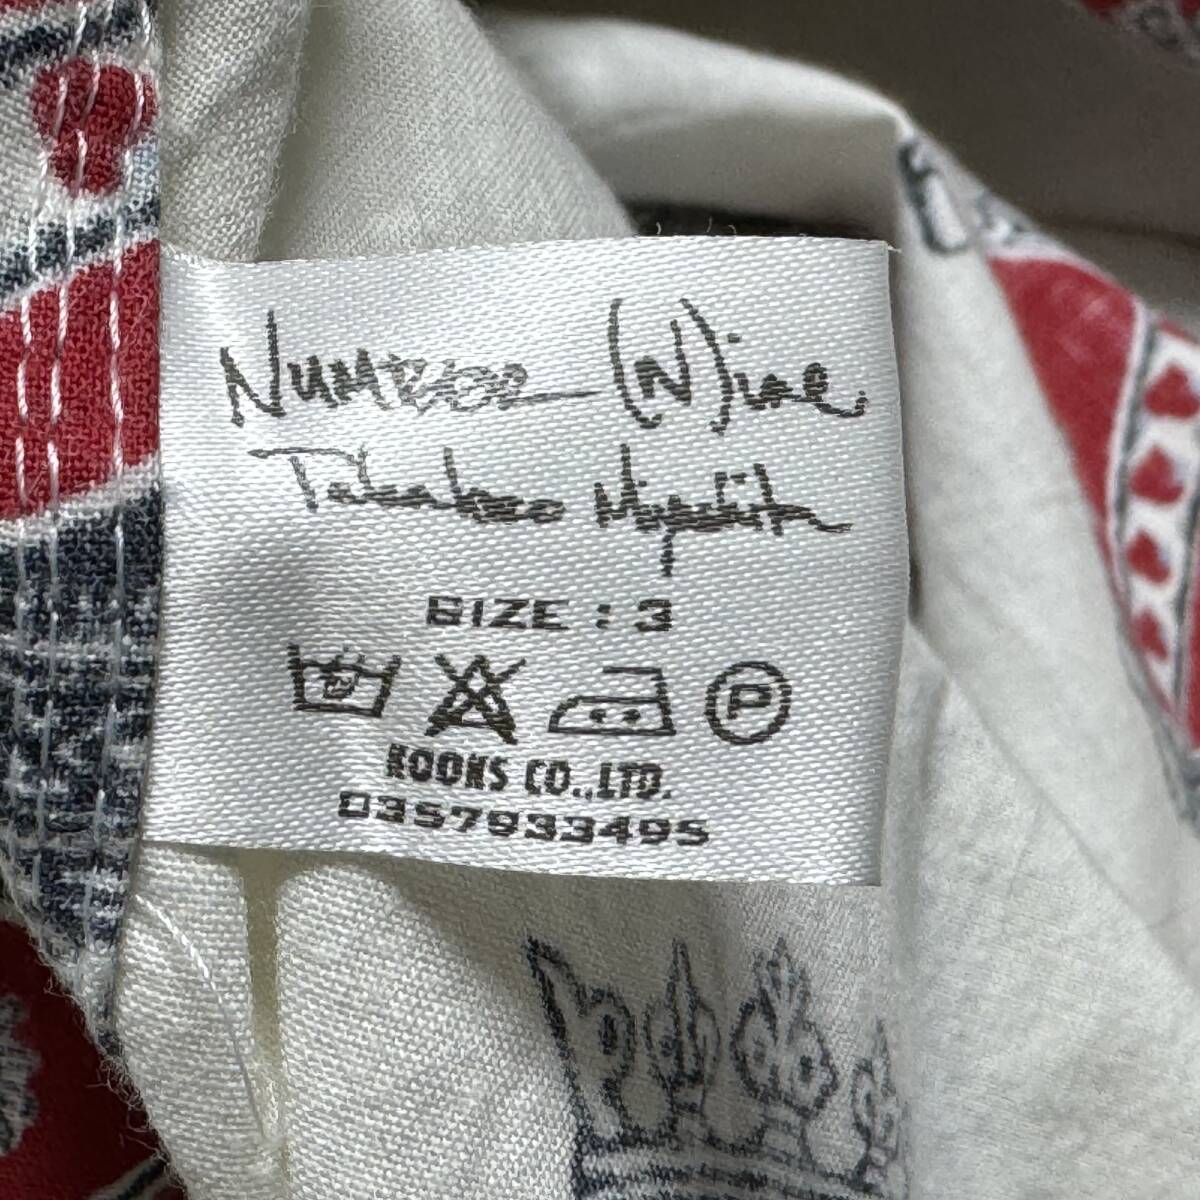 FD35) rare Number Nine 03ss/aw Heart emblem pyjamas size:3 / NIRVANA Cart ko bar n blouson ji shirt knitted pants Denim 